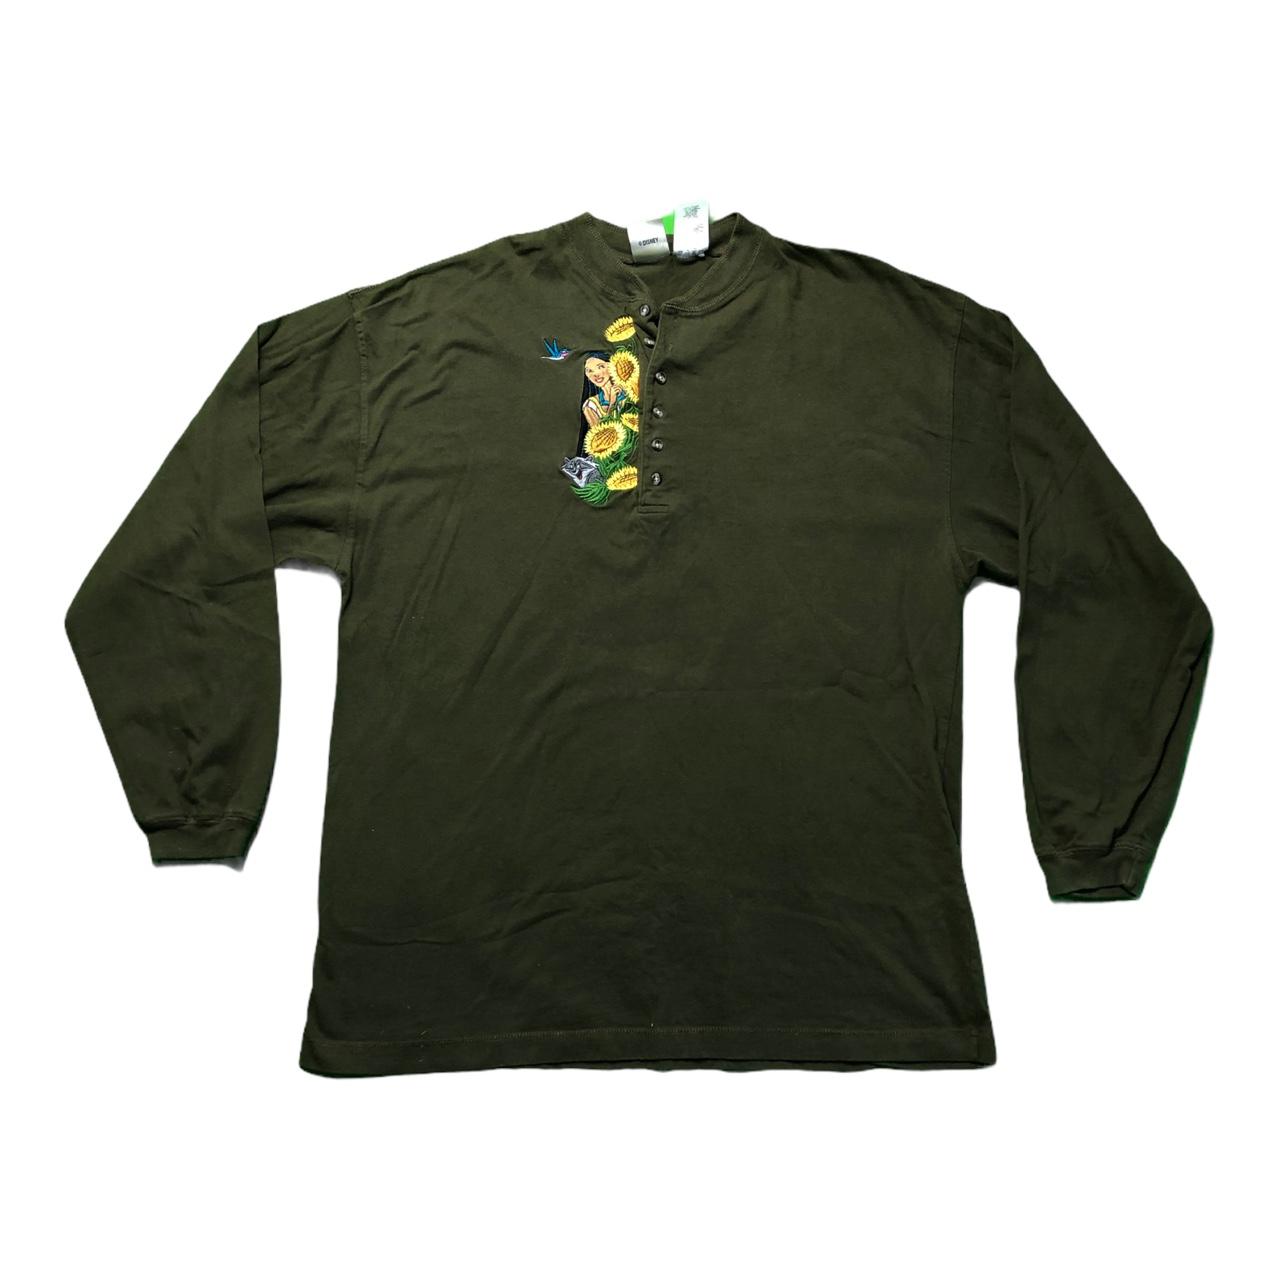 American Vintage Men's Green T-shirt